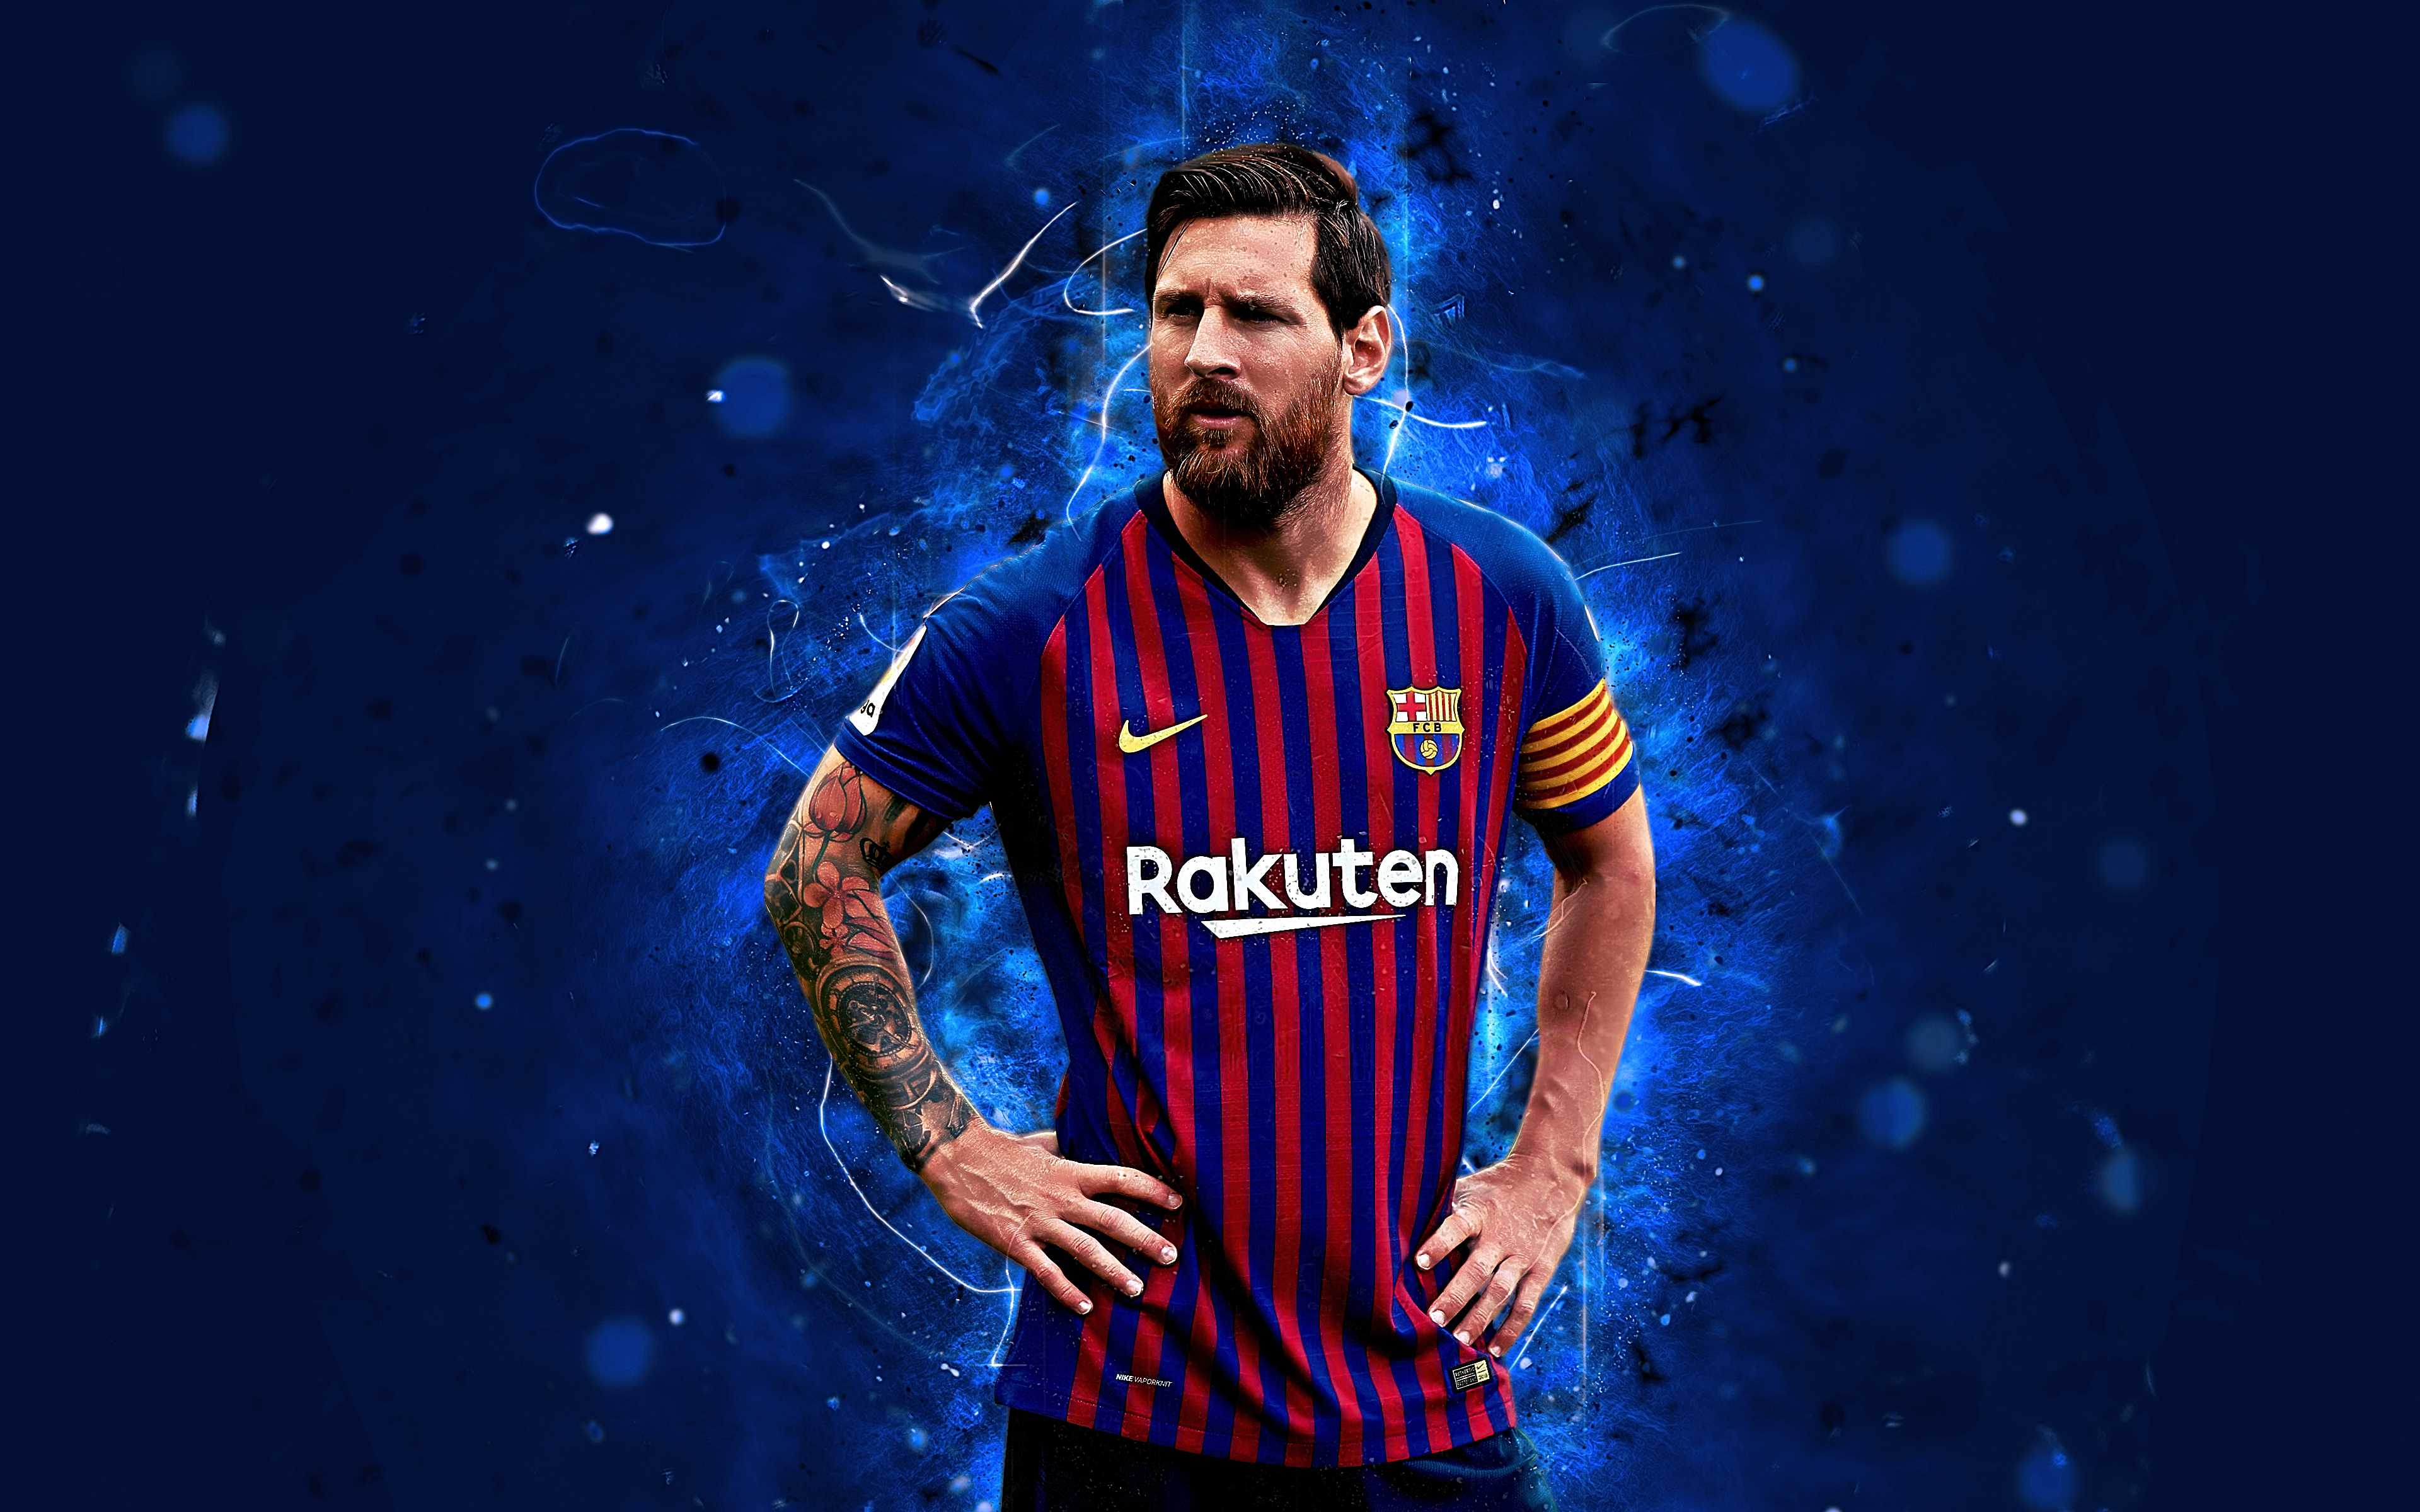 Lionel Messi Desktop Wallpaper 4k